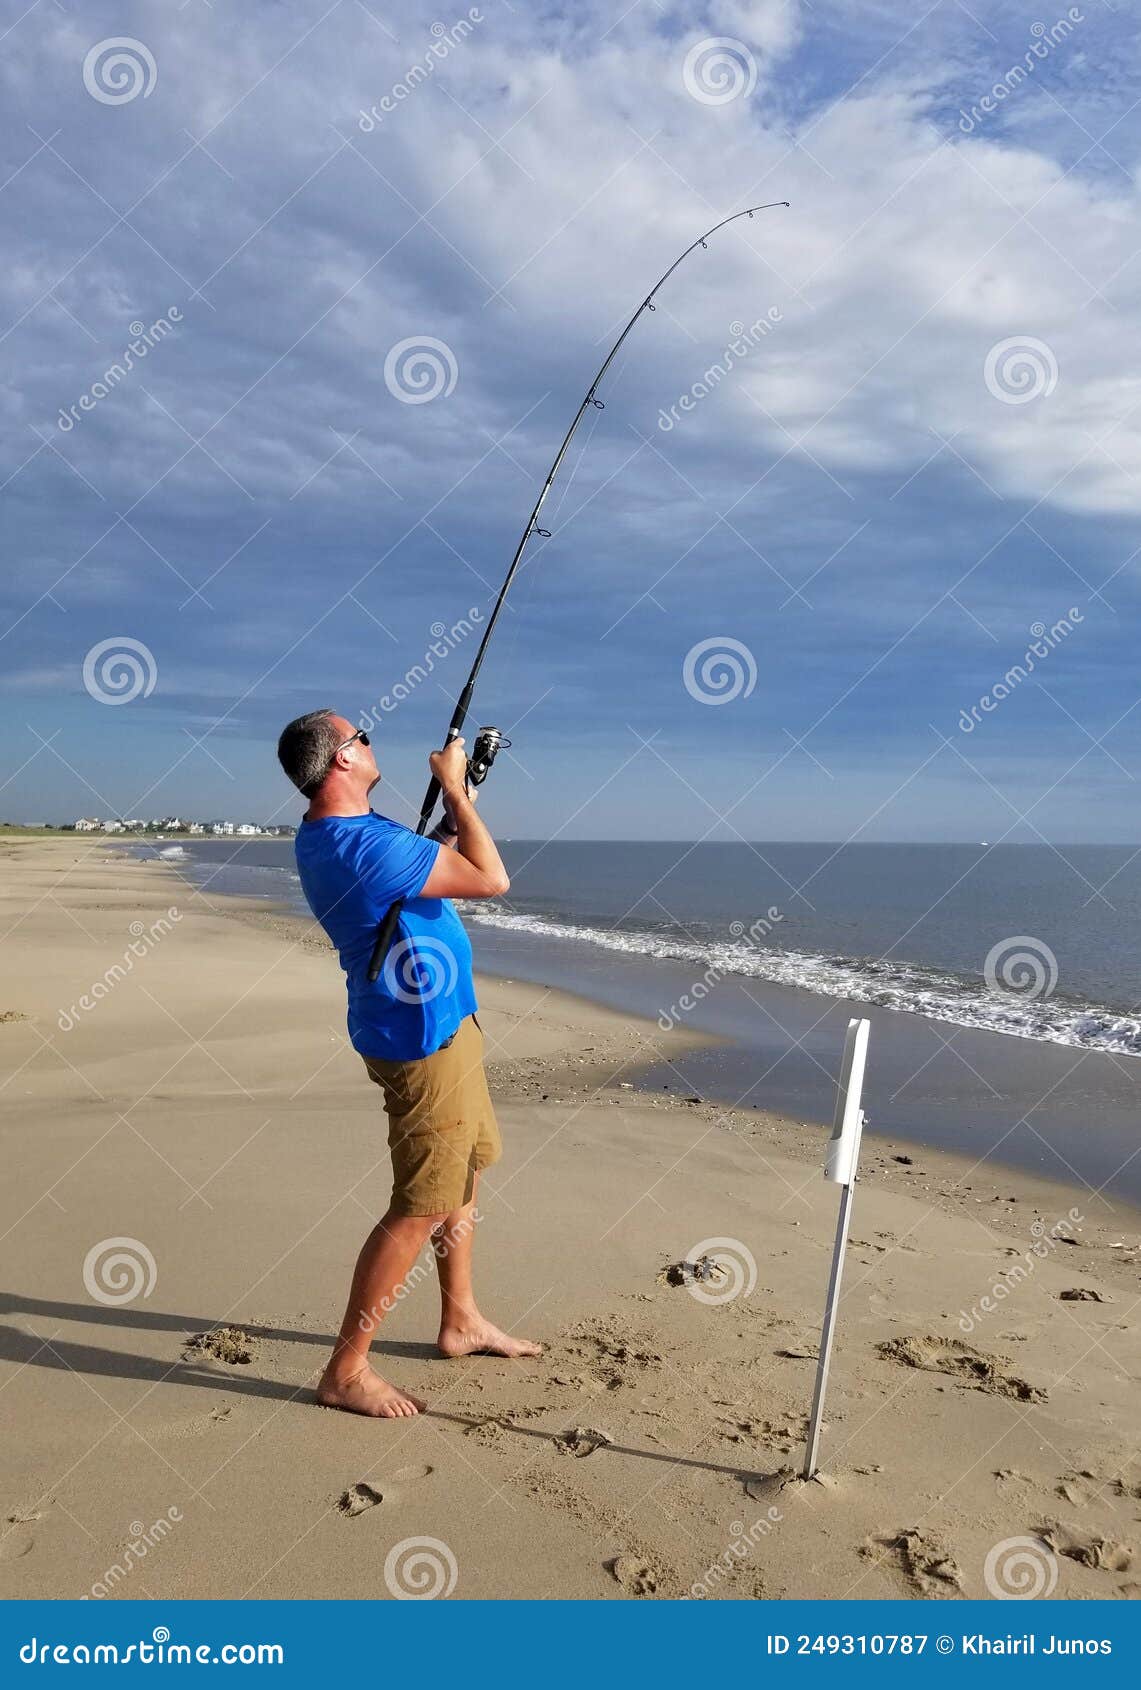 https://thumbs.dreamstime.com/z/broadkill-beach-delaware-u-s-may-man-reeling-big-fish-using-long-surf-fishing-rod-broadkill-beach-delaware-u-s-may-man-249310787.jpg